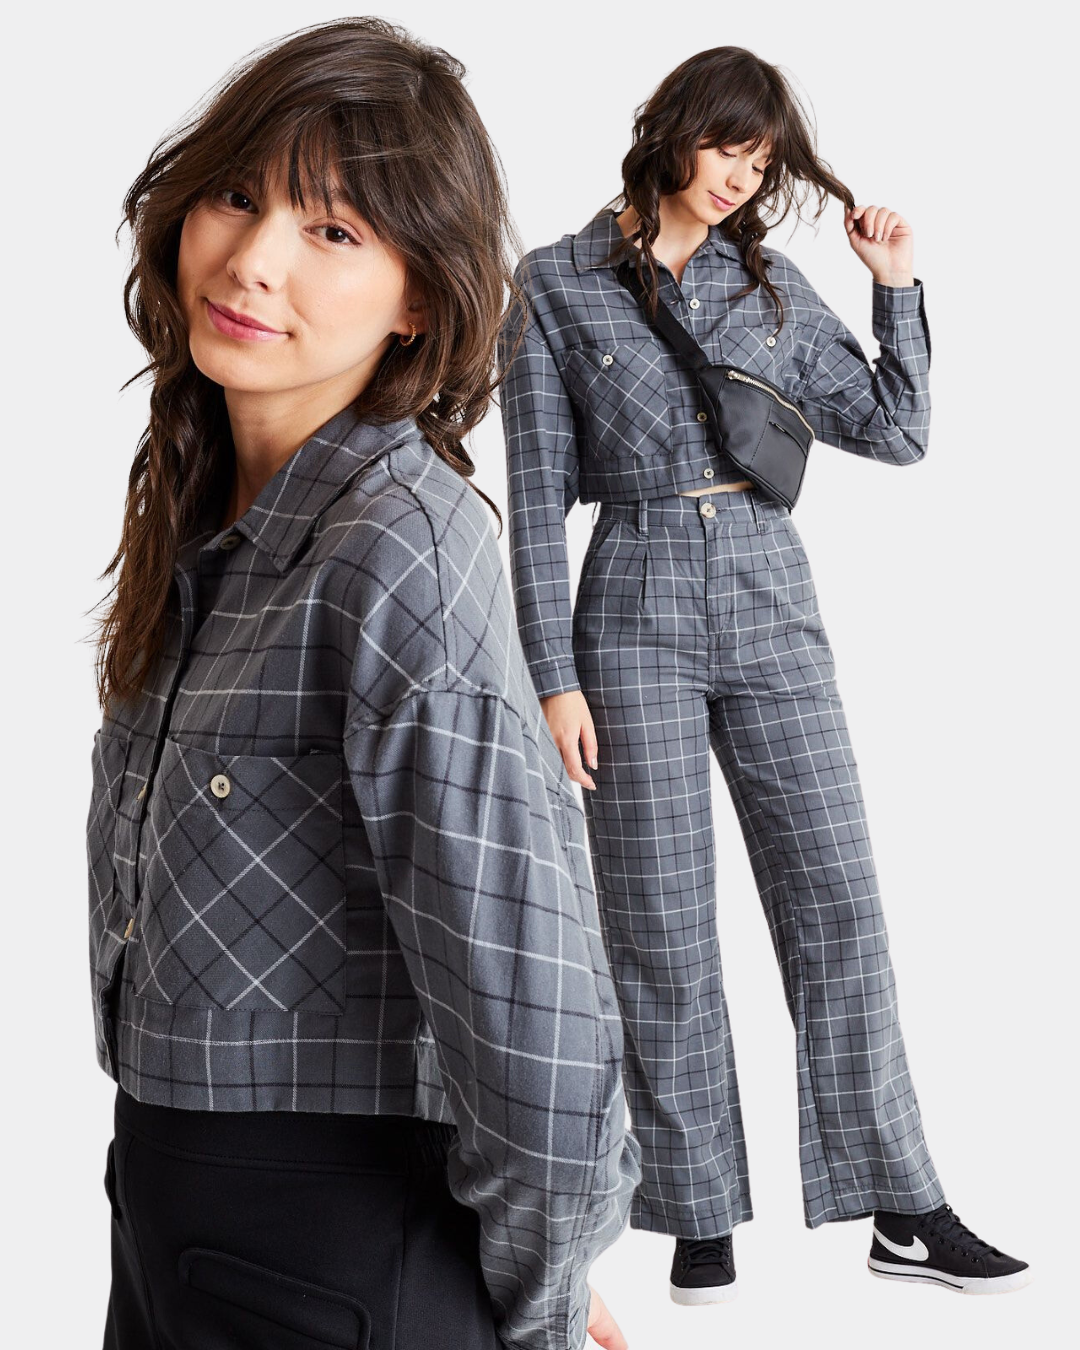 modelo veste conjunto xadrez cinza, camisa cropped e calça xadrez cinza gang feminina - estilo dark suave